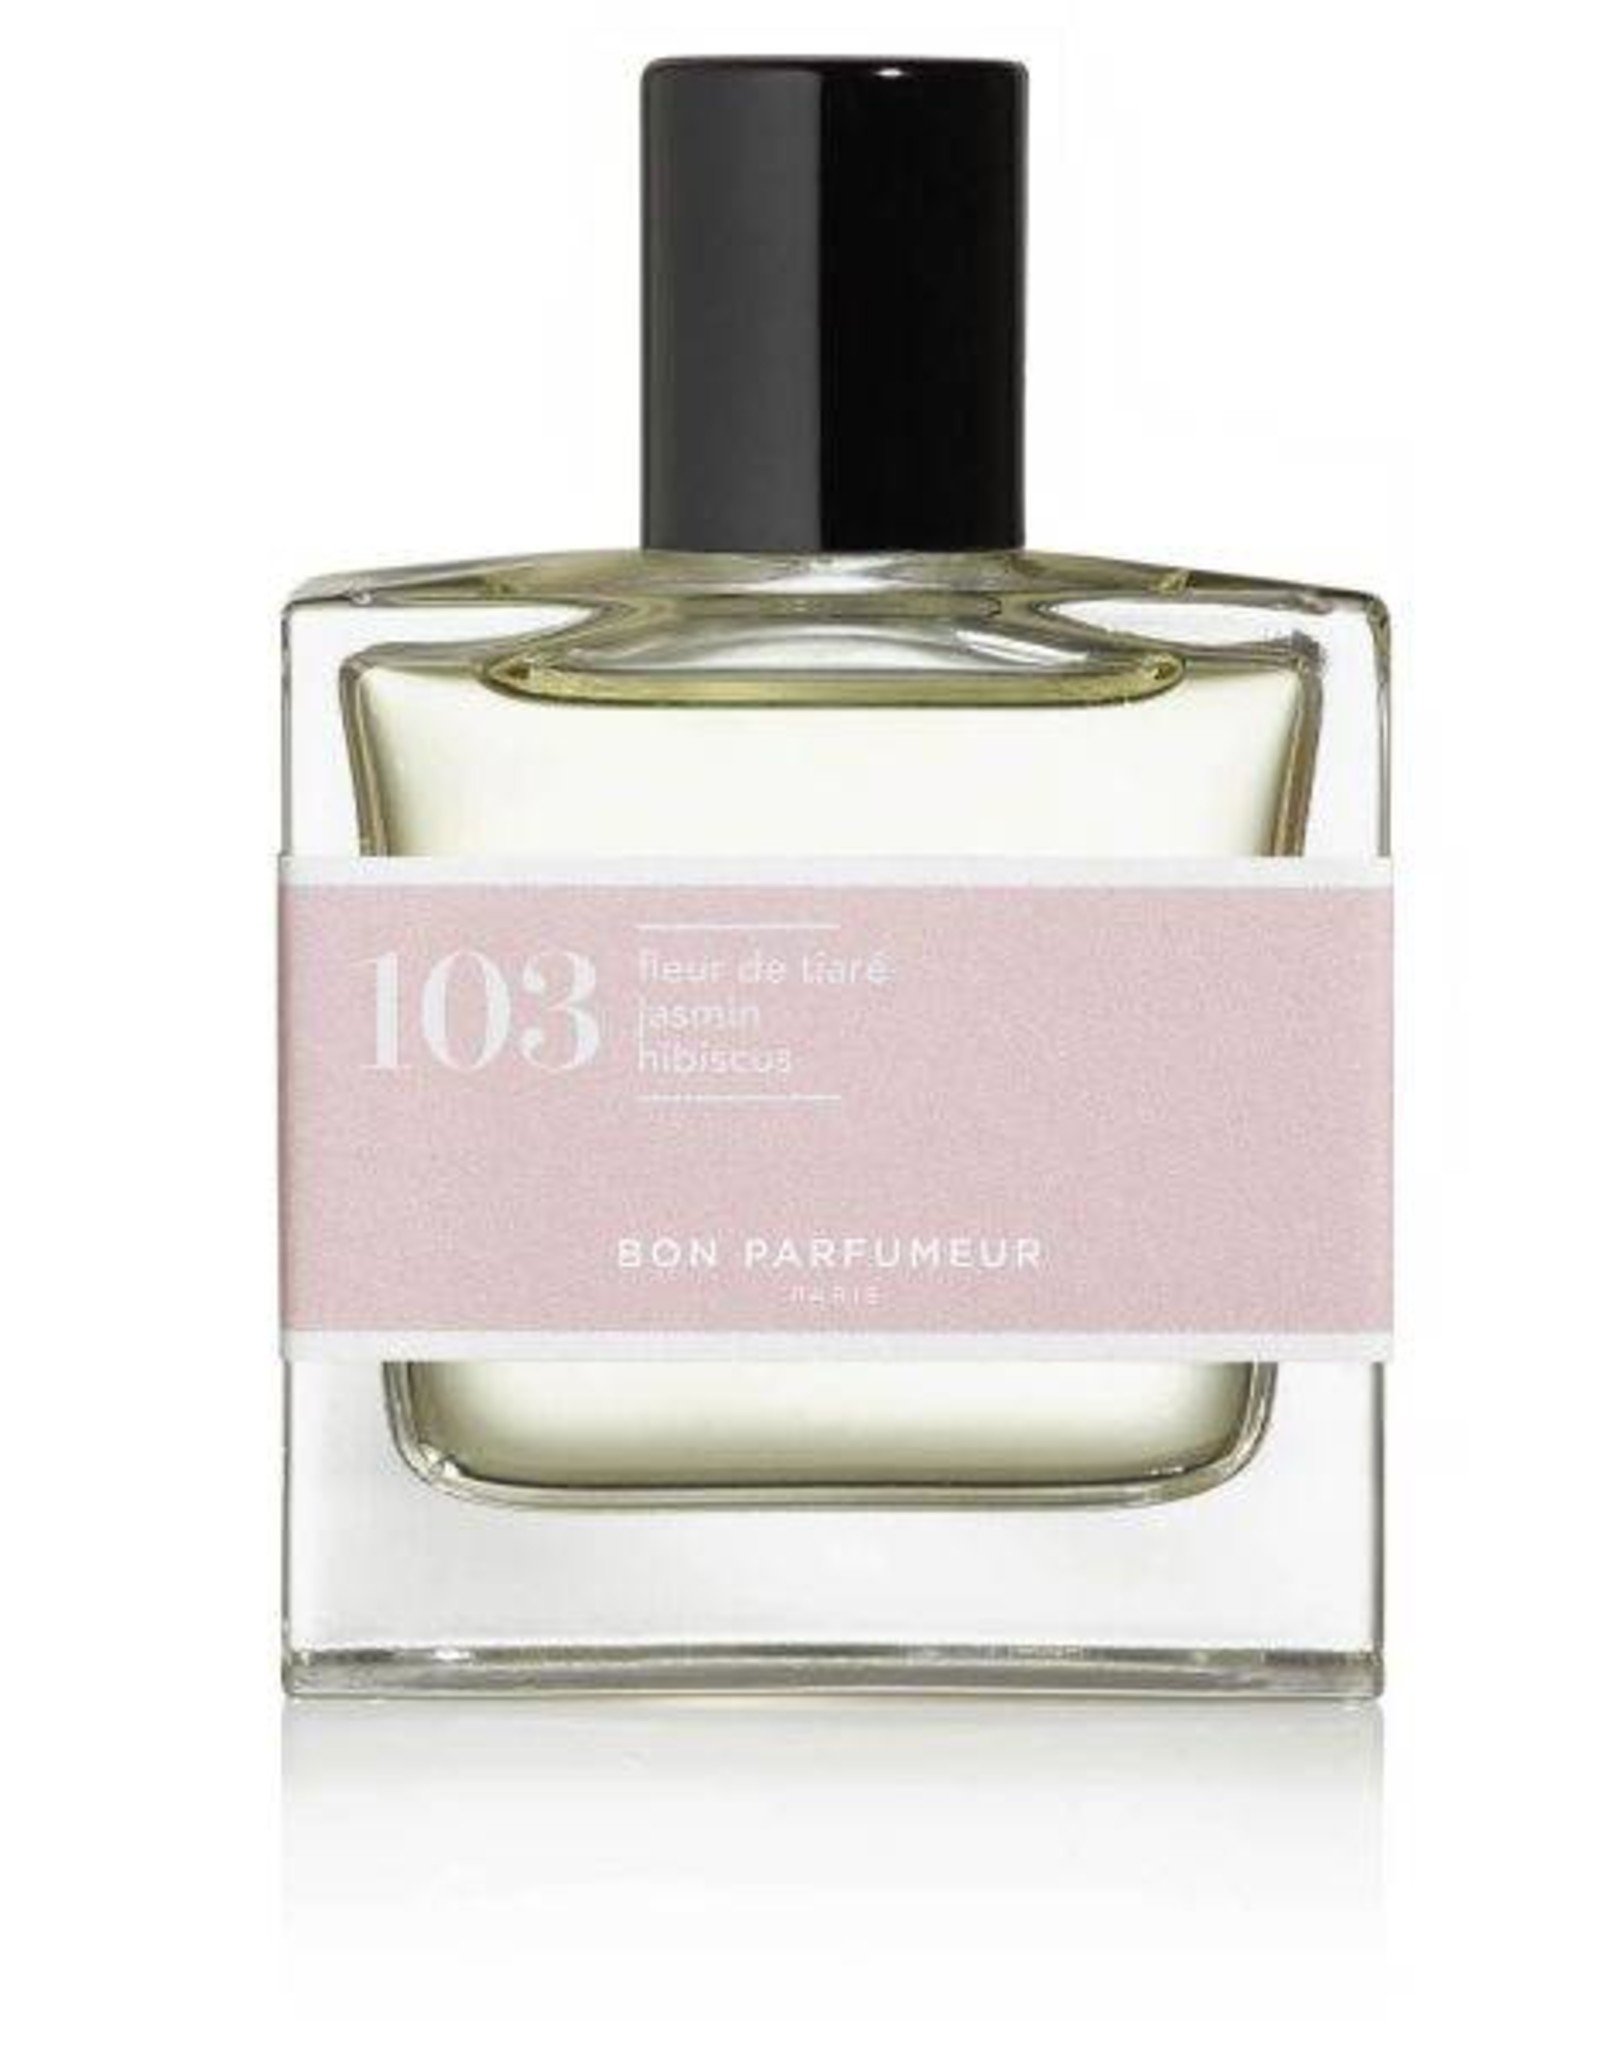 Bon Parfumeur Bon Parfumeur 103 tiare flower, jasmine, hibiscus